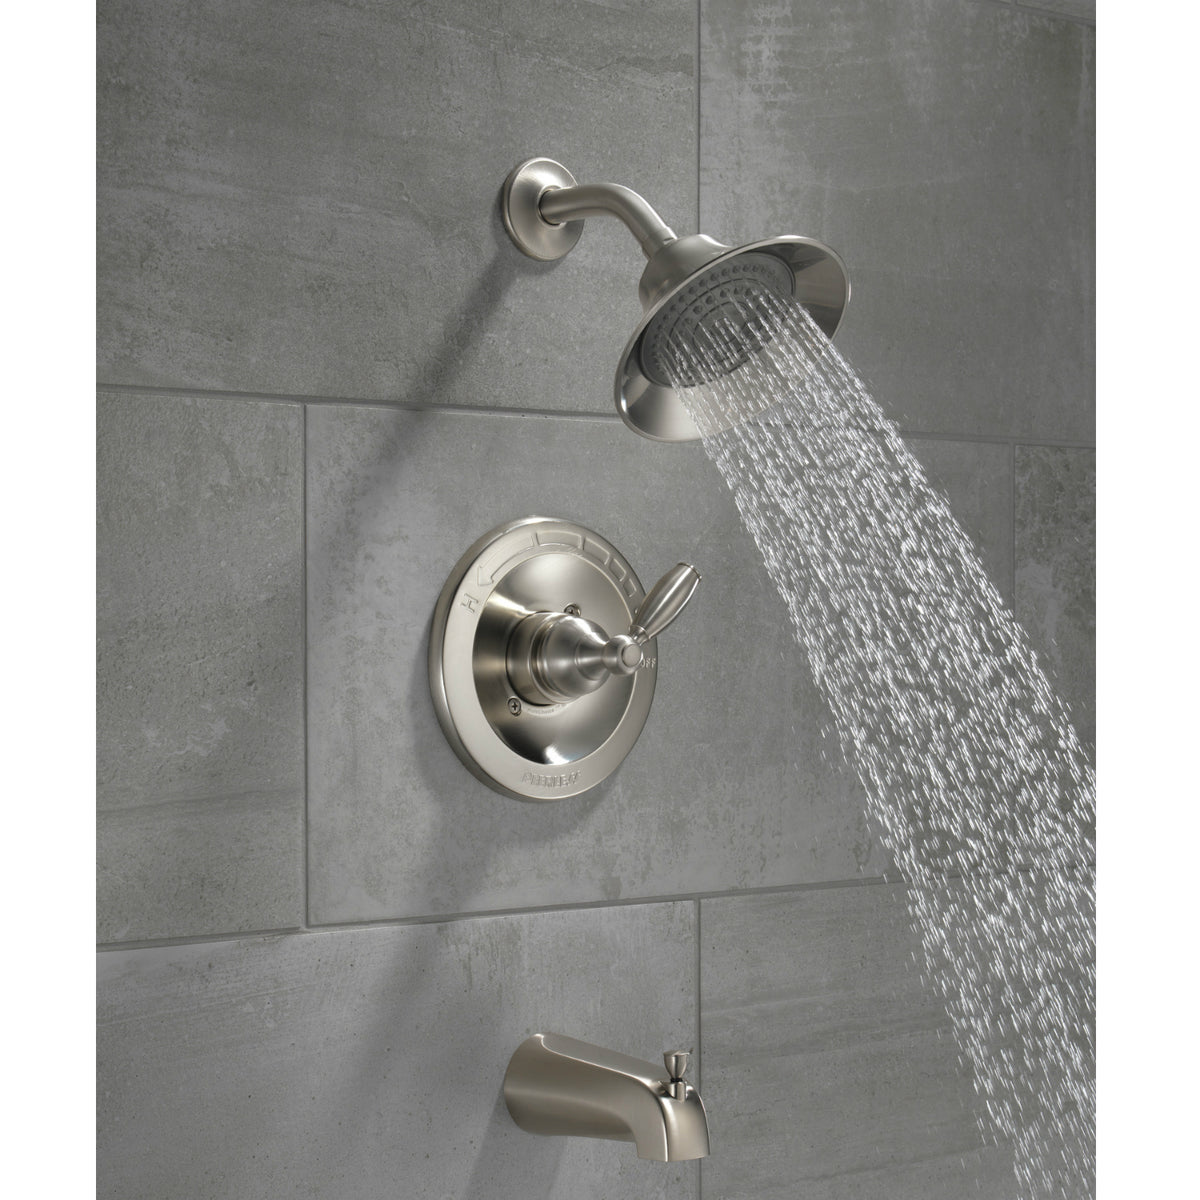 Peerless P188775-BN Single Handle Tub & Shower Faucet, Brushed Nickel Finish